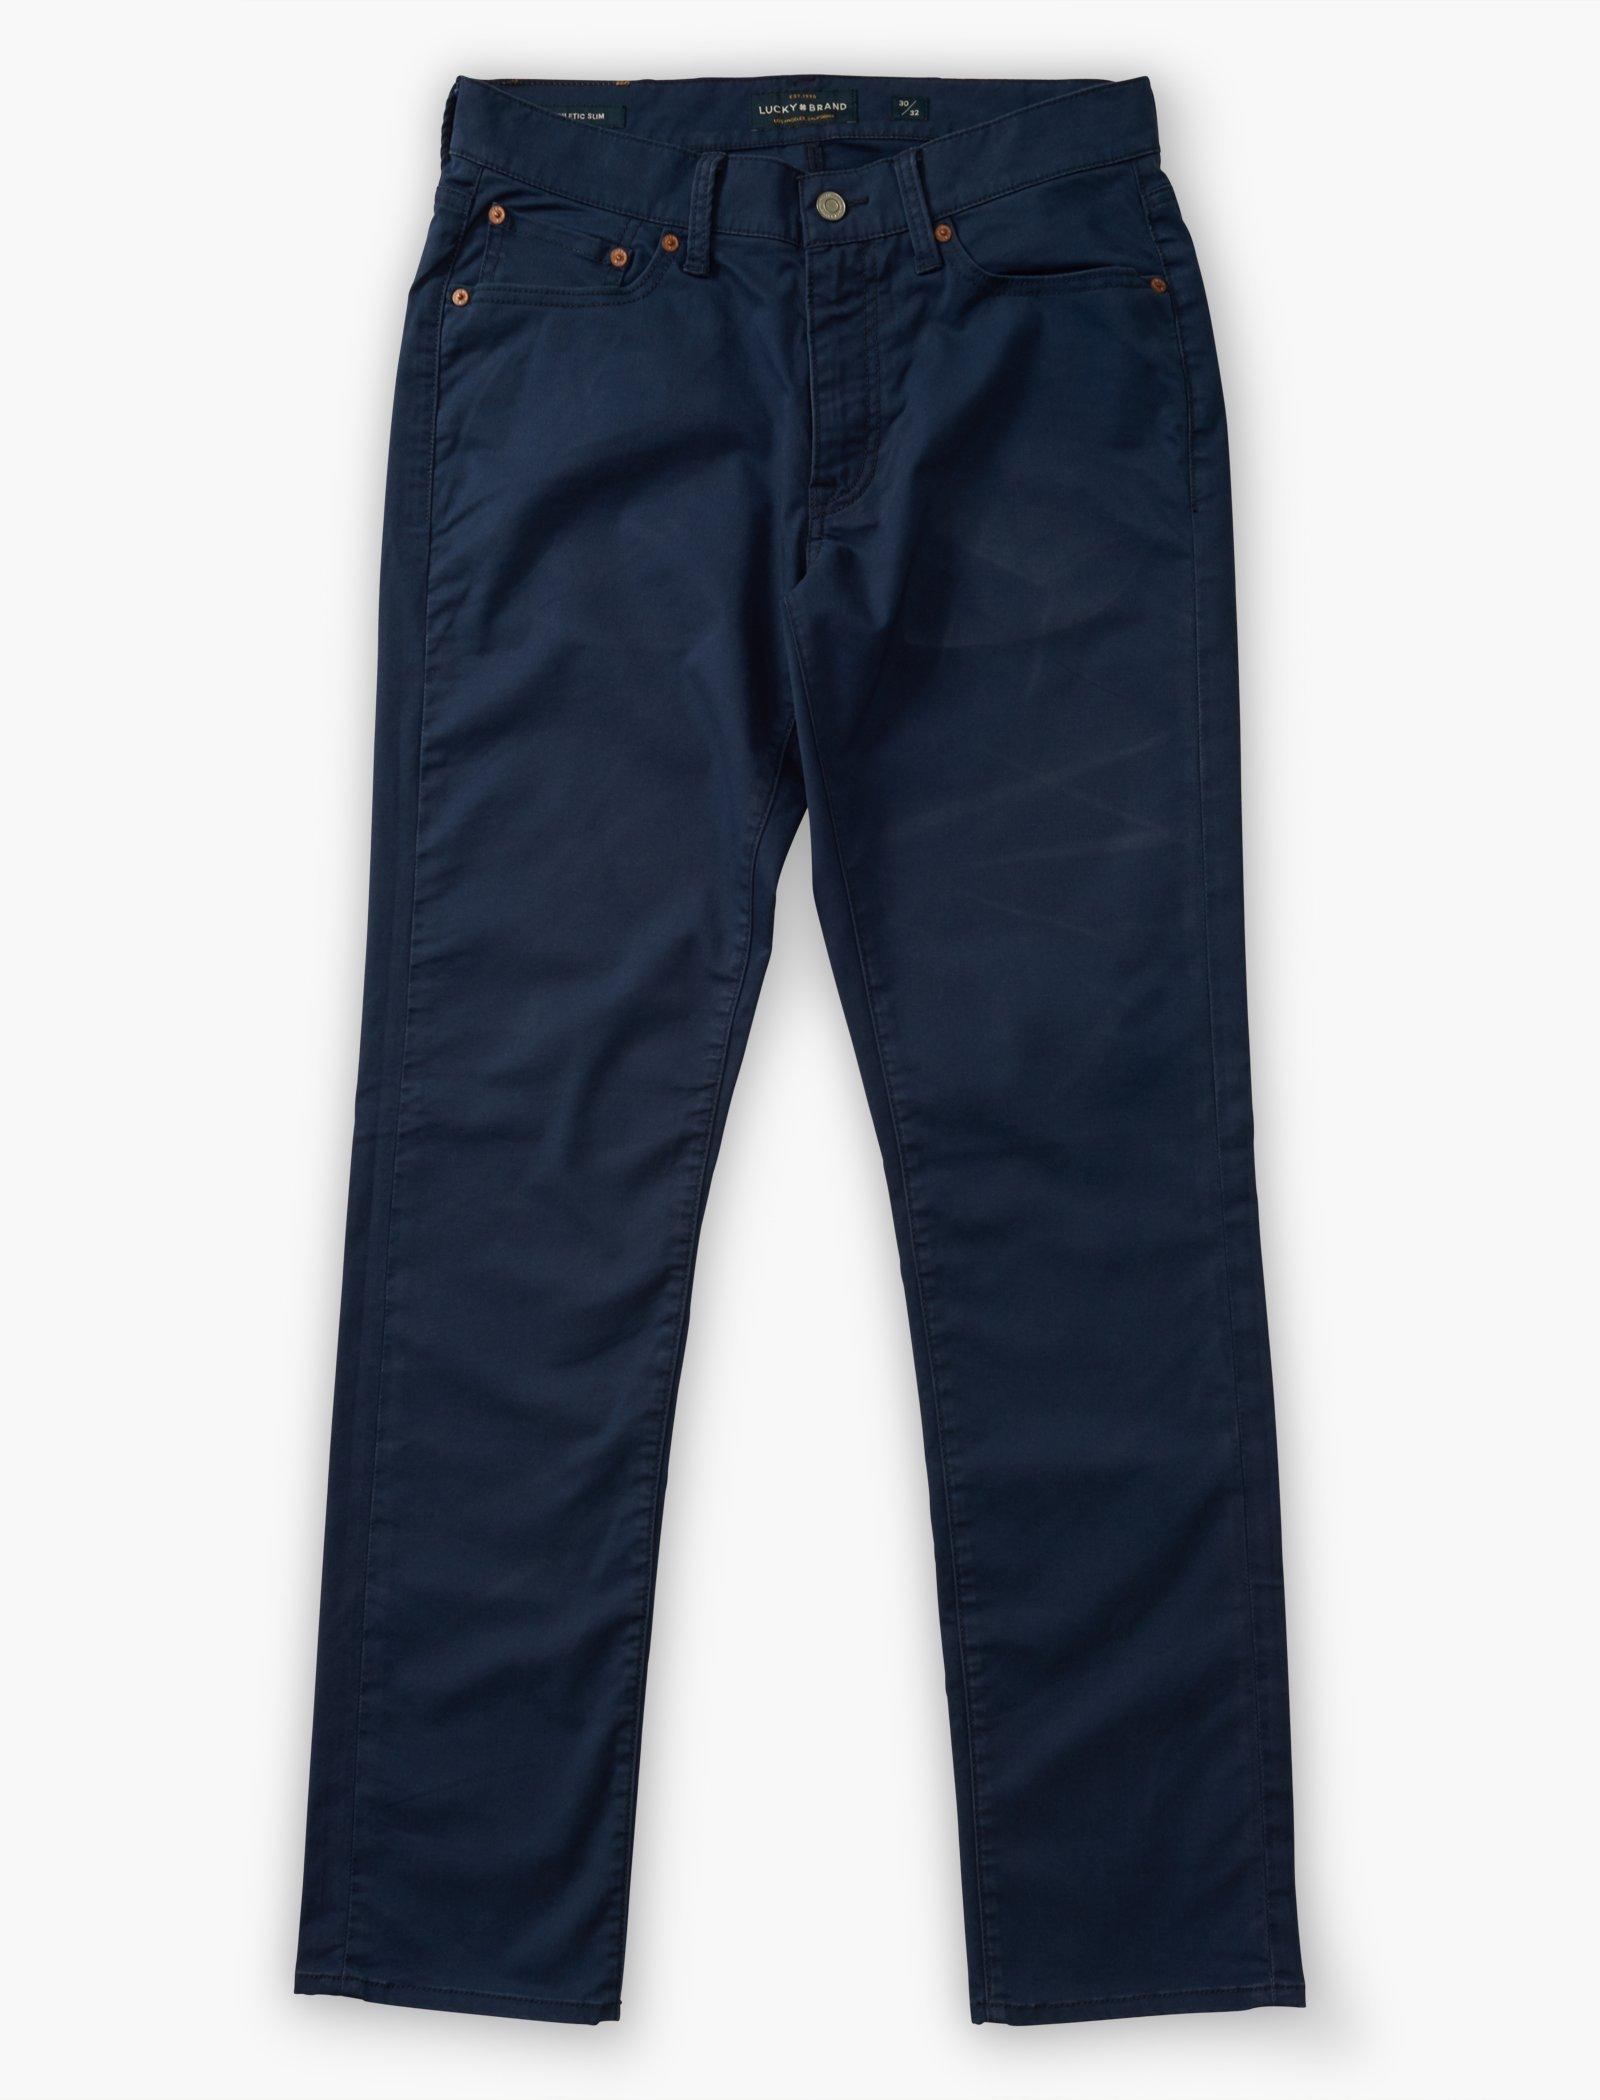 Lucky Brand Men's Jeans 410 Athletic Slim 34x34 2 way stretch